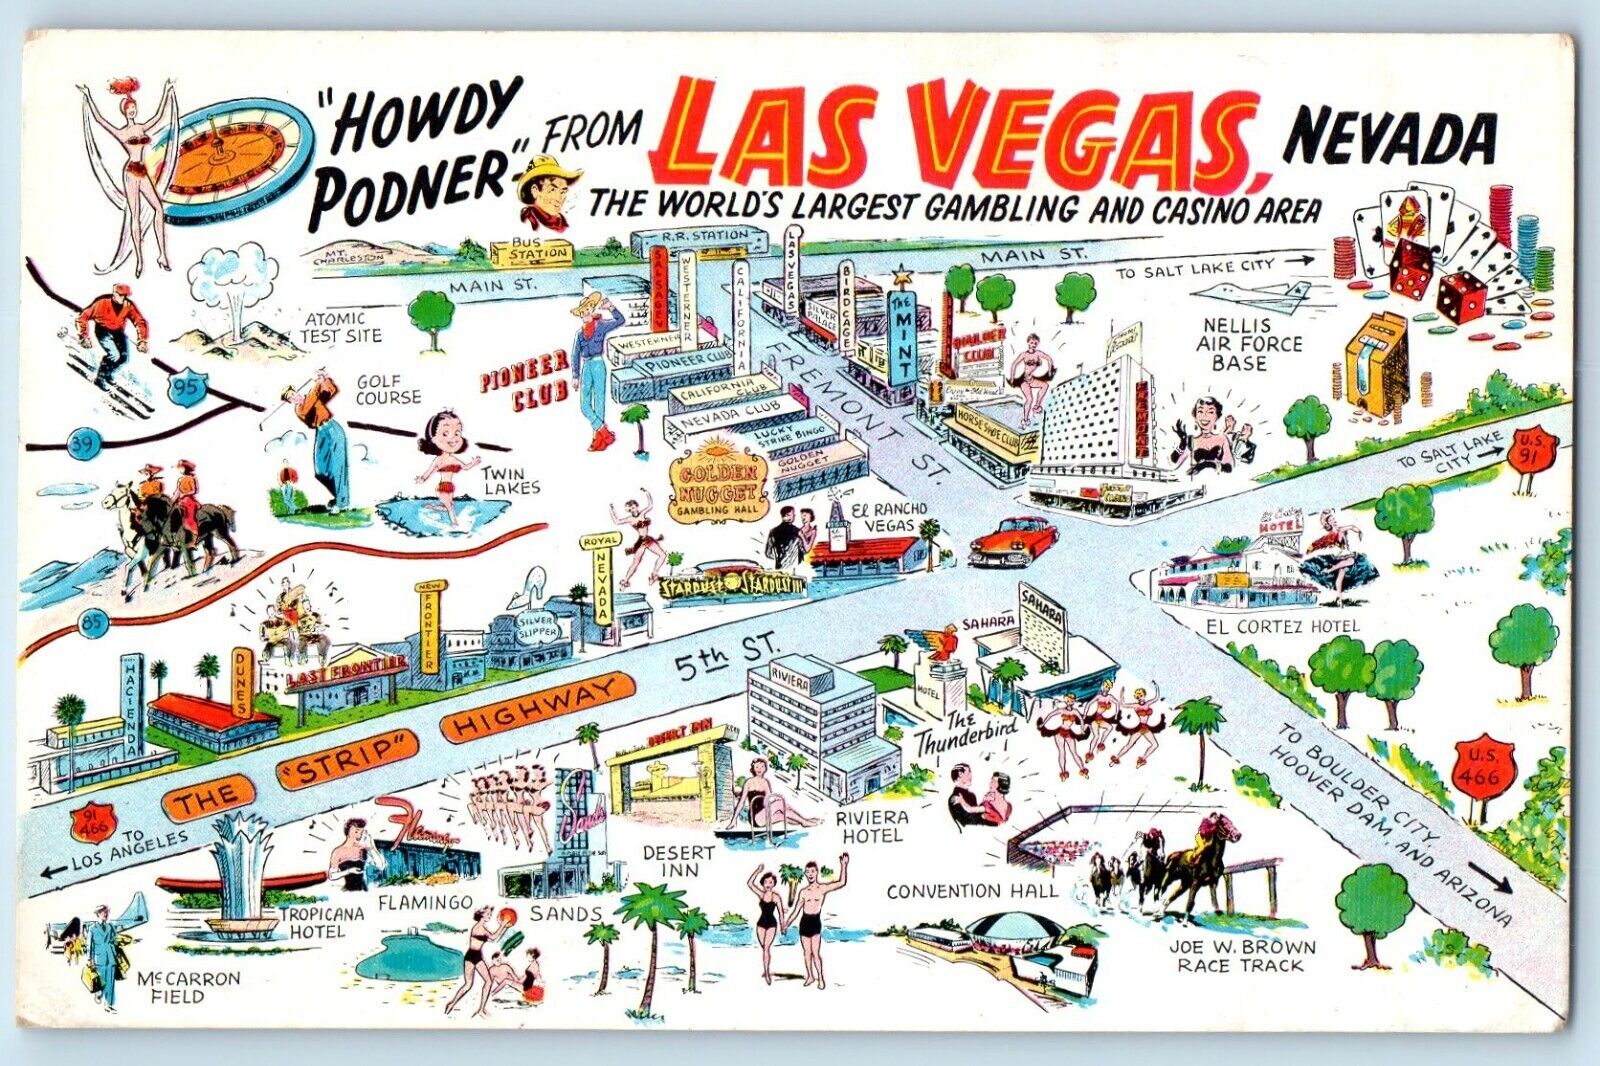 Las Vegas Nevada Postcard Howdy Podner Casino Area Exterior 1960 Vintage Antique